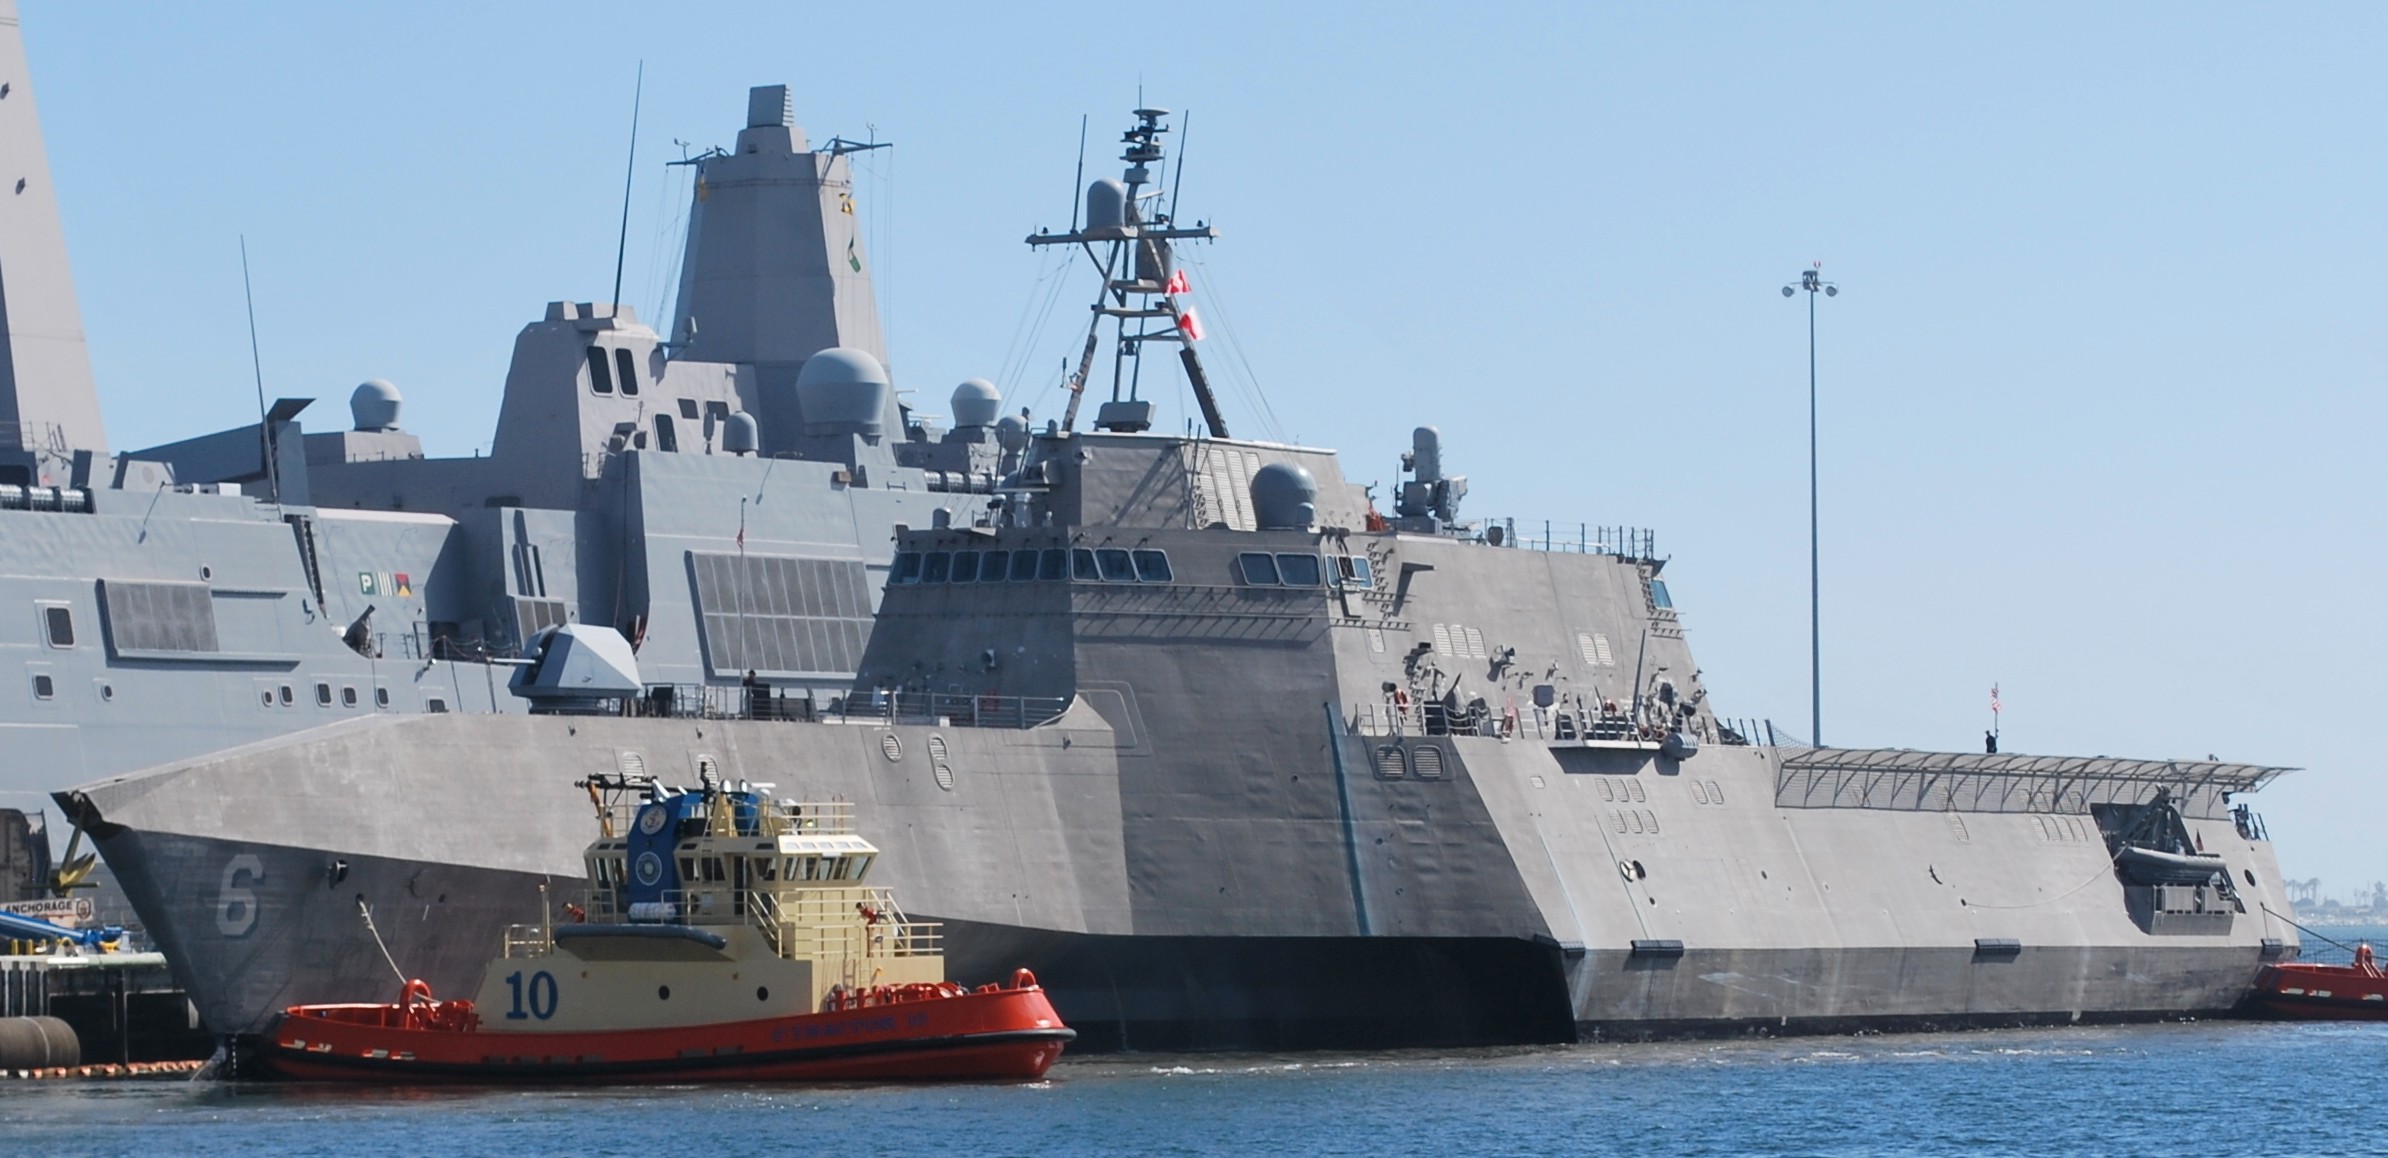 lcs-6 uss jackson independence class littoral combat ship us navy 09 san diego california